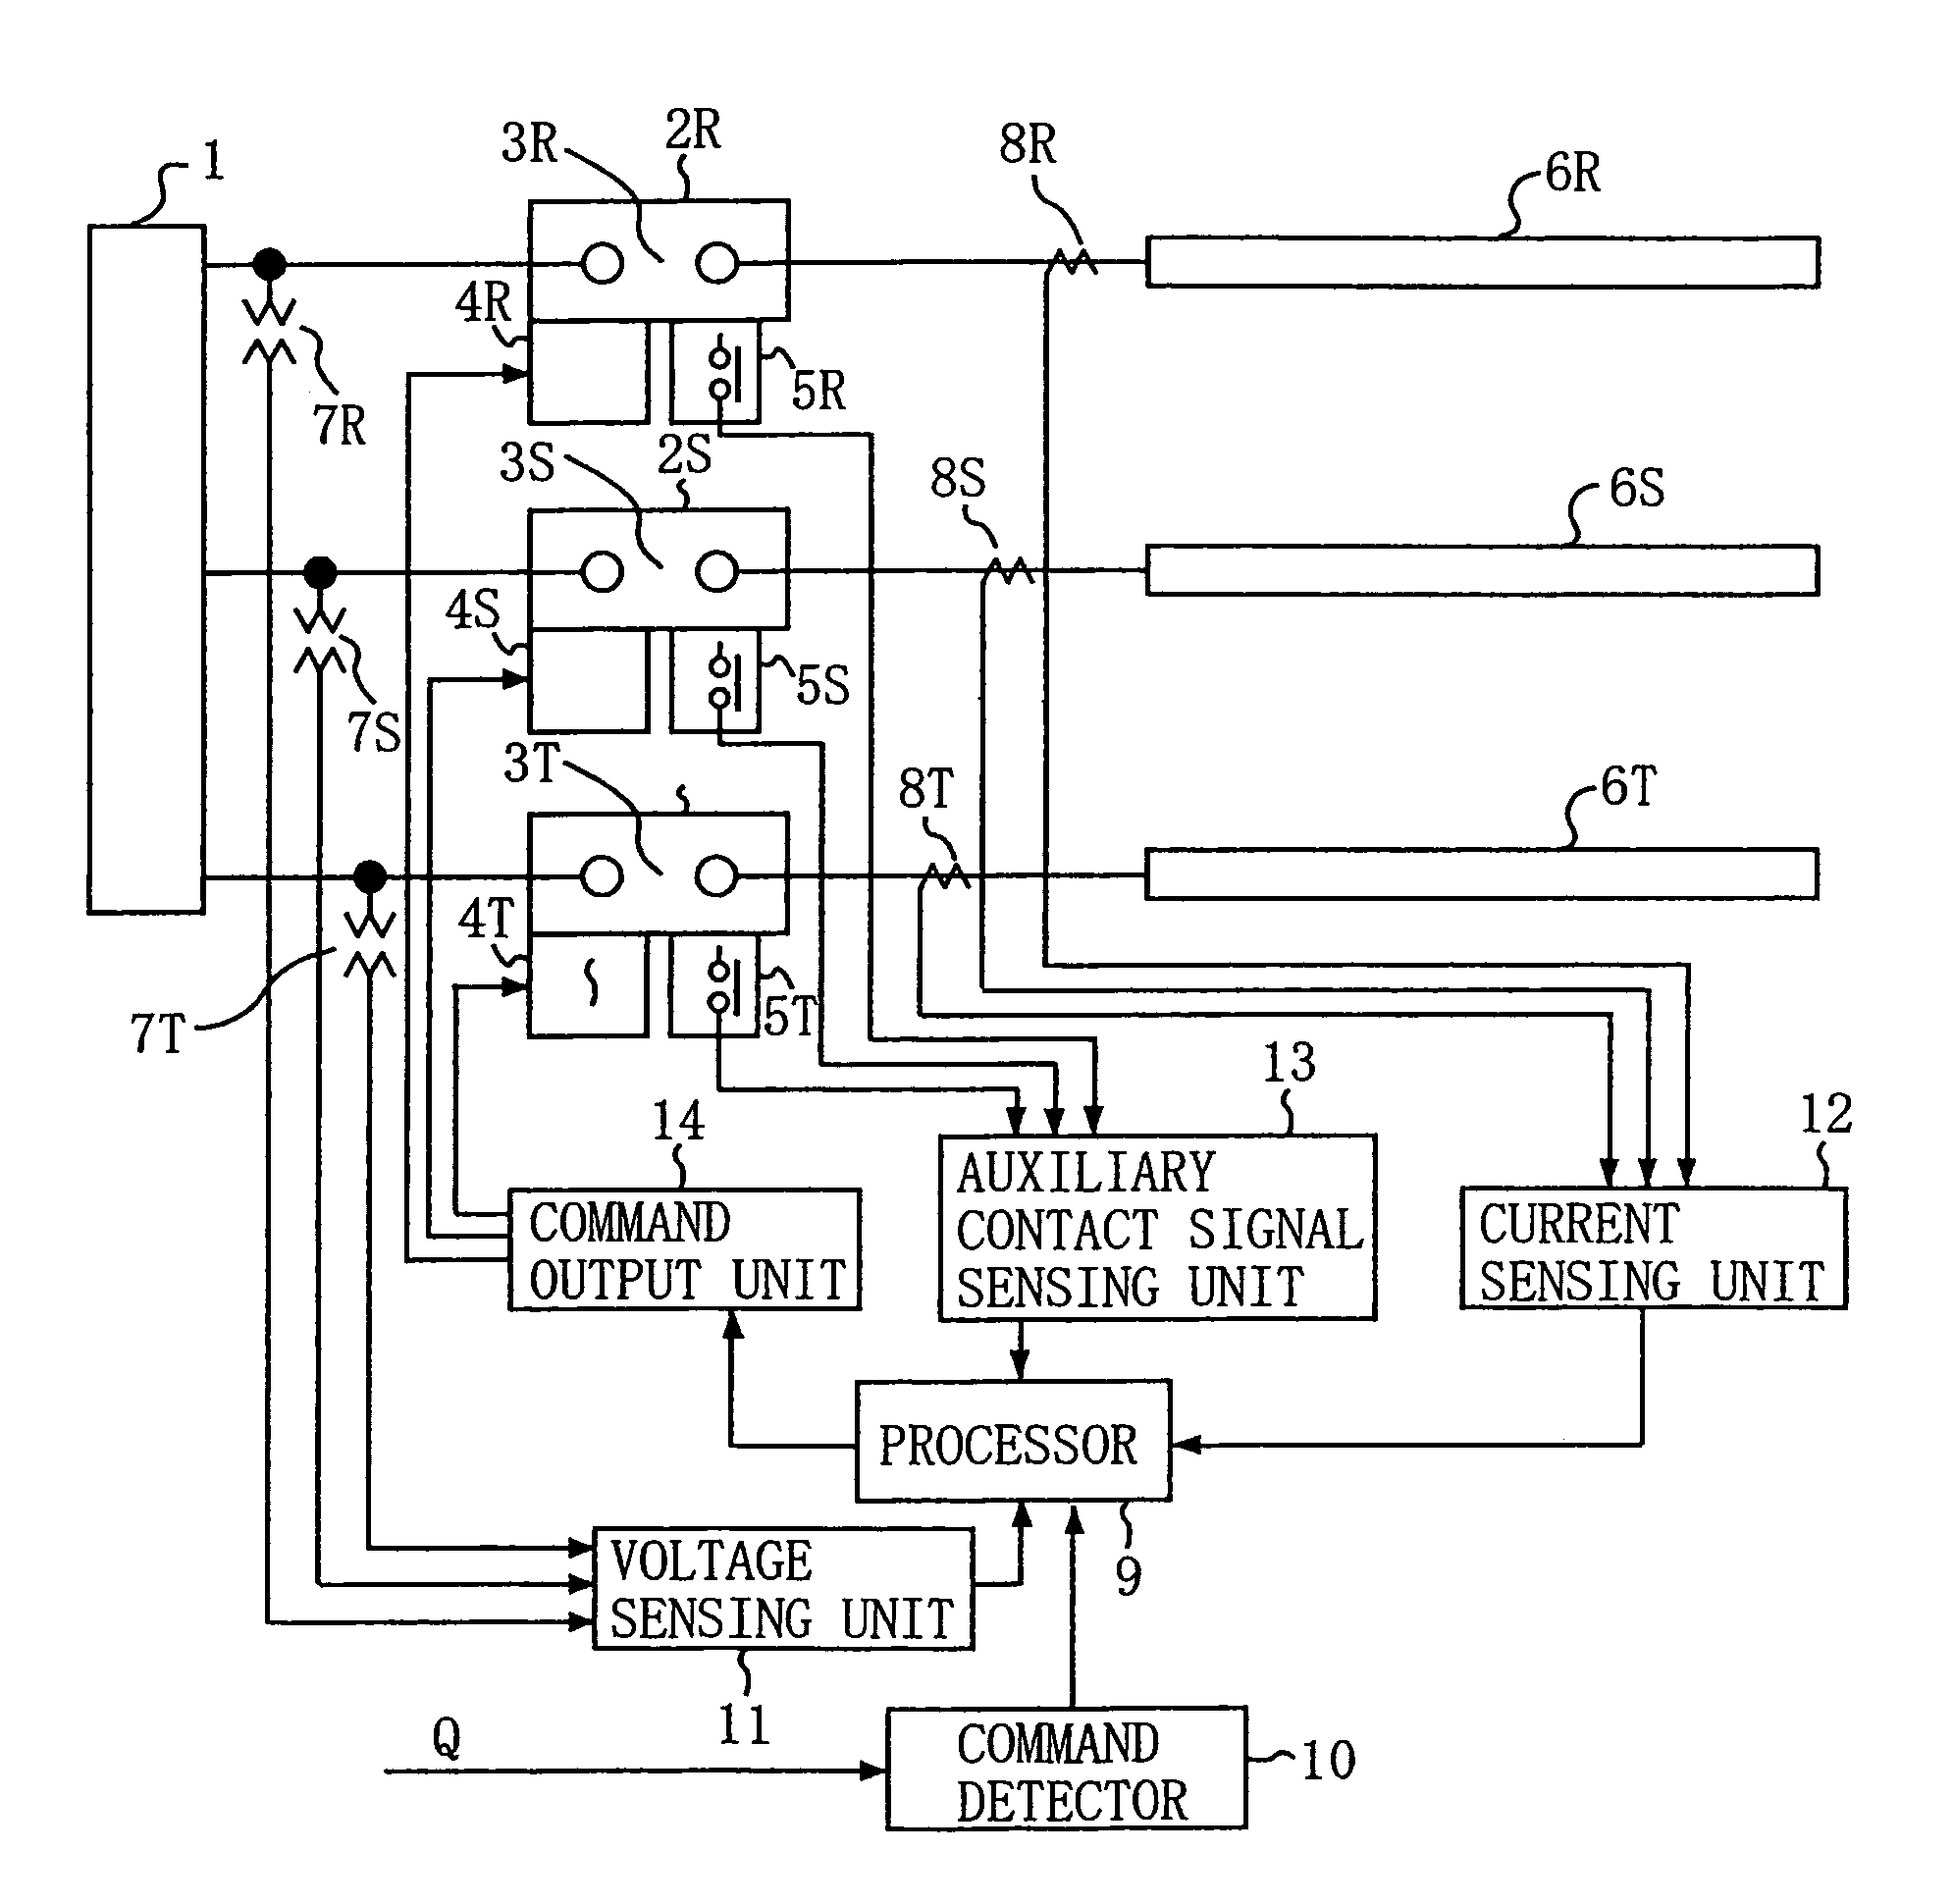 Switchgear control apparatus